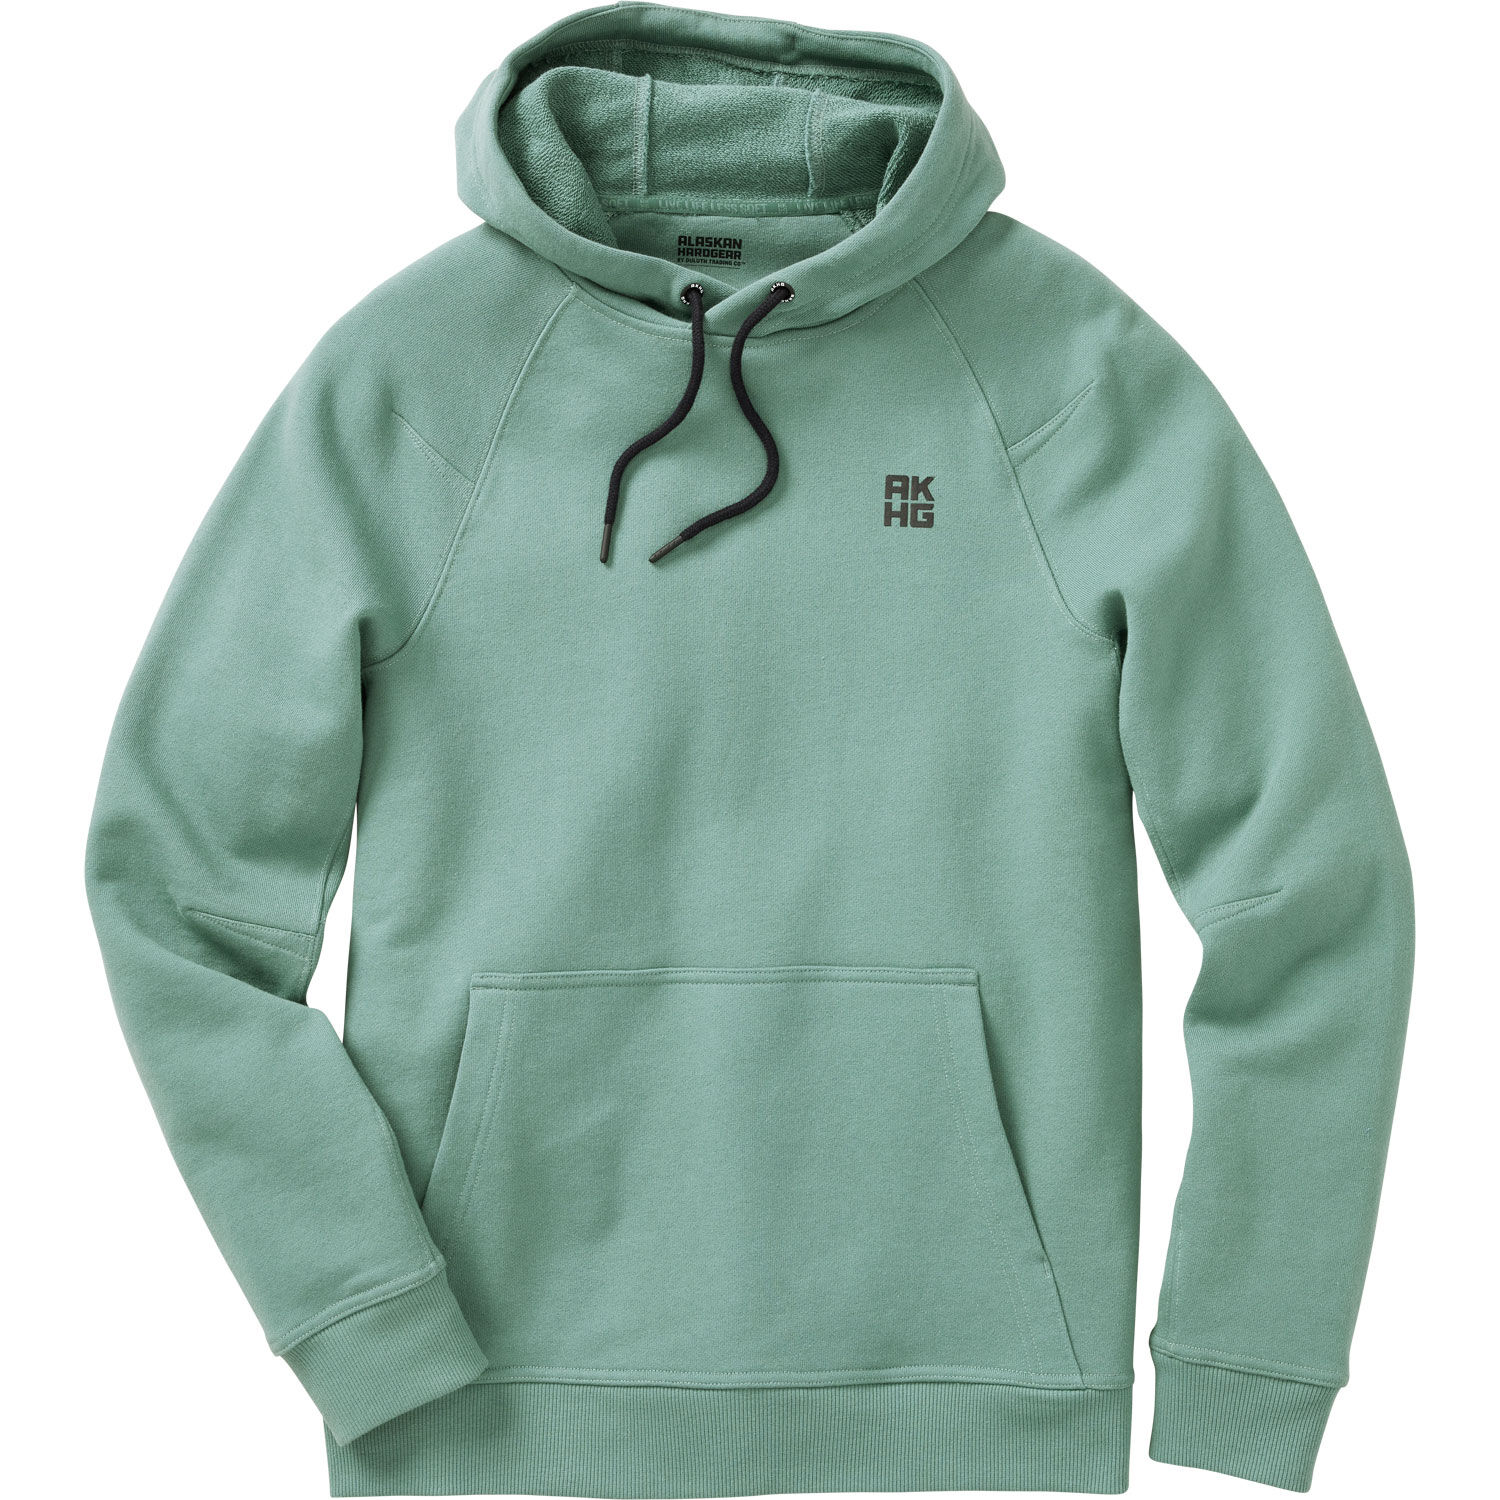 Men's Sweatshirts, Hoodies & Fleece Jackets | Duluth Trading Company